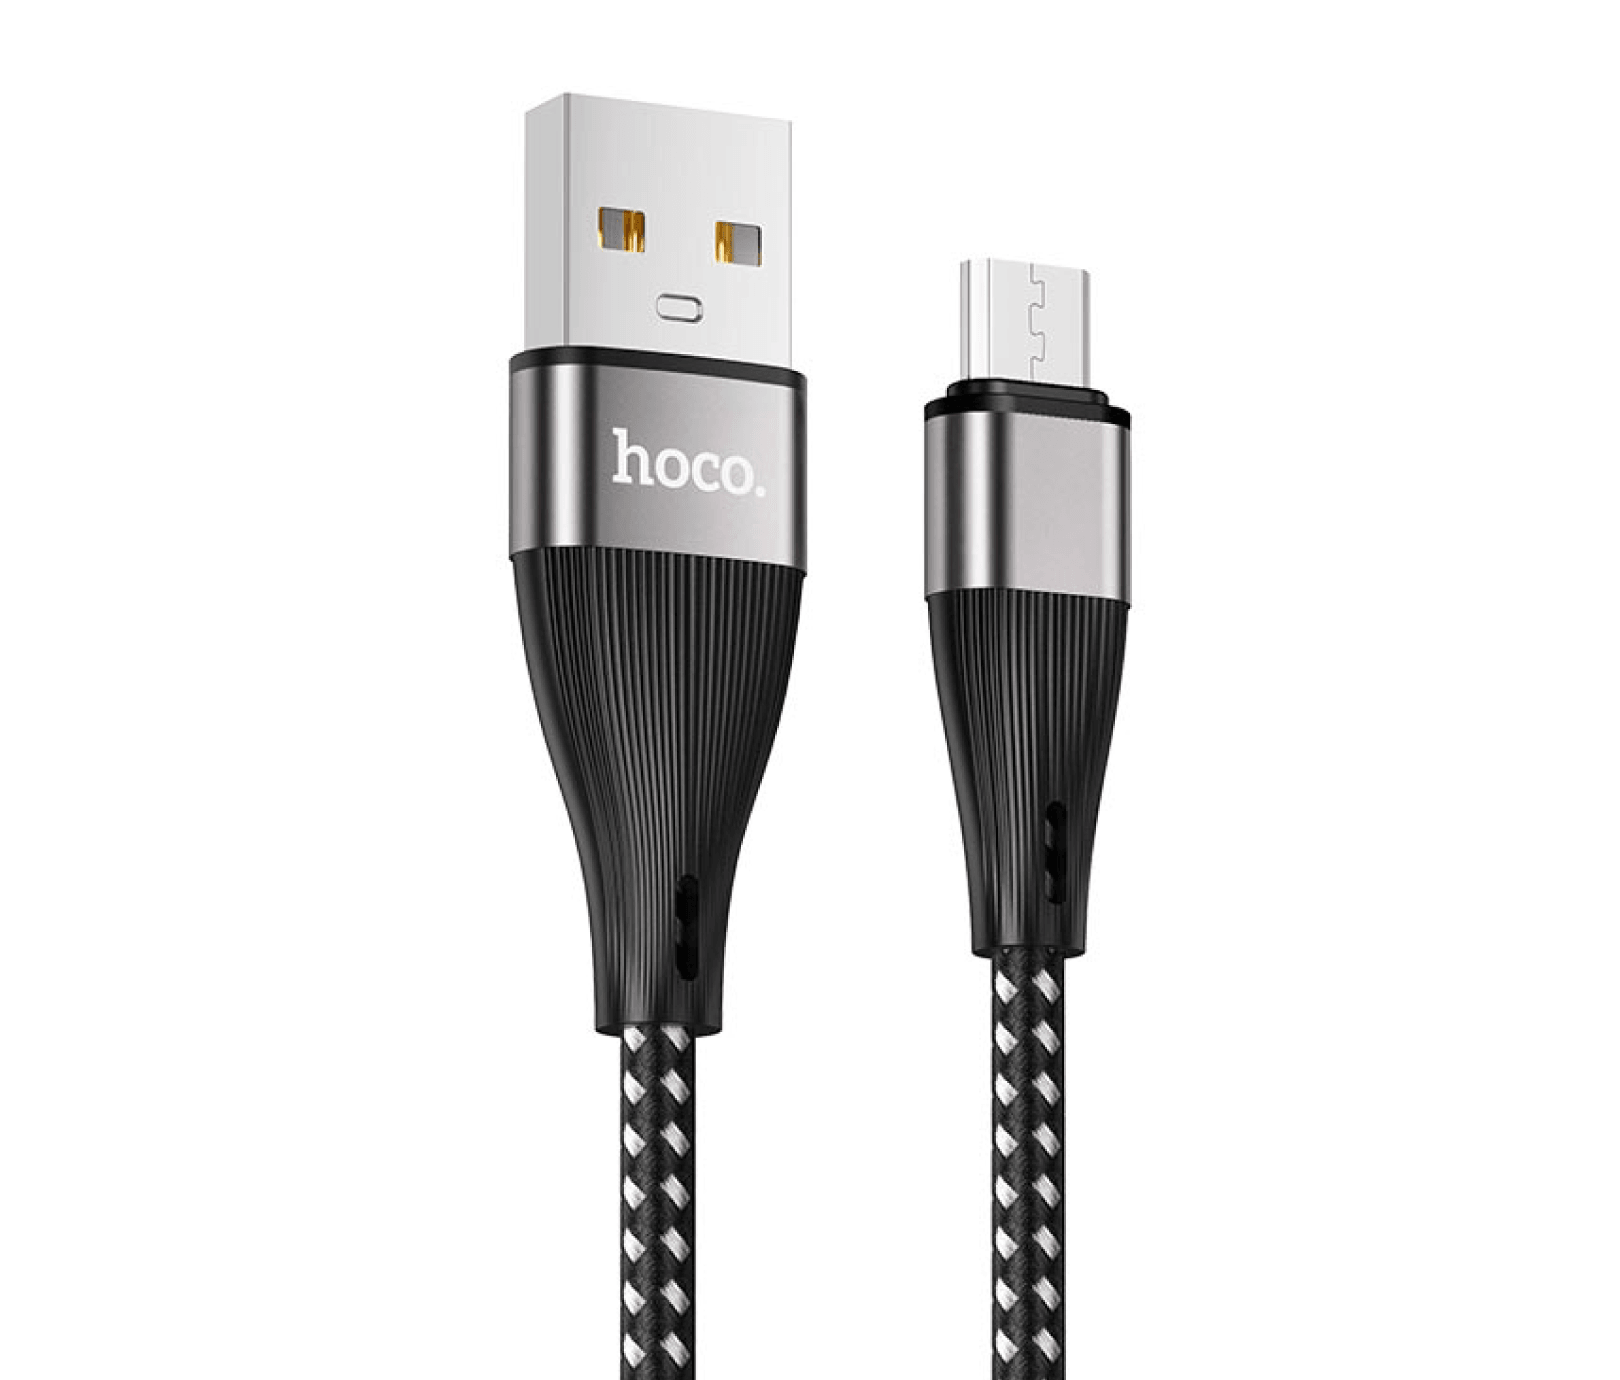 Cable MicroUSB-USB - Smartbuyecuador